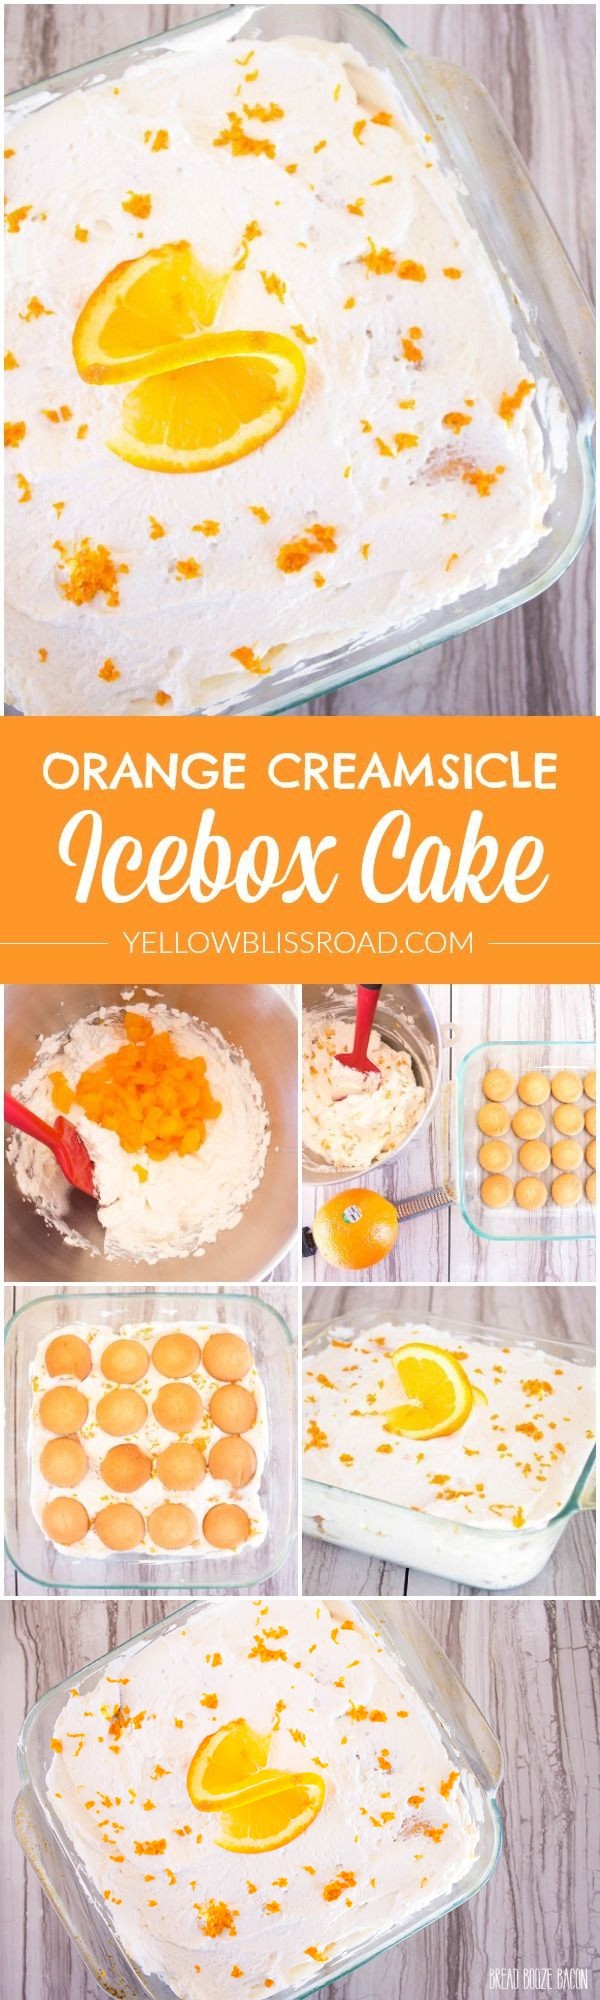 Orange Creamsicle Icebox Cake